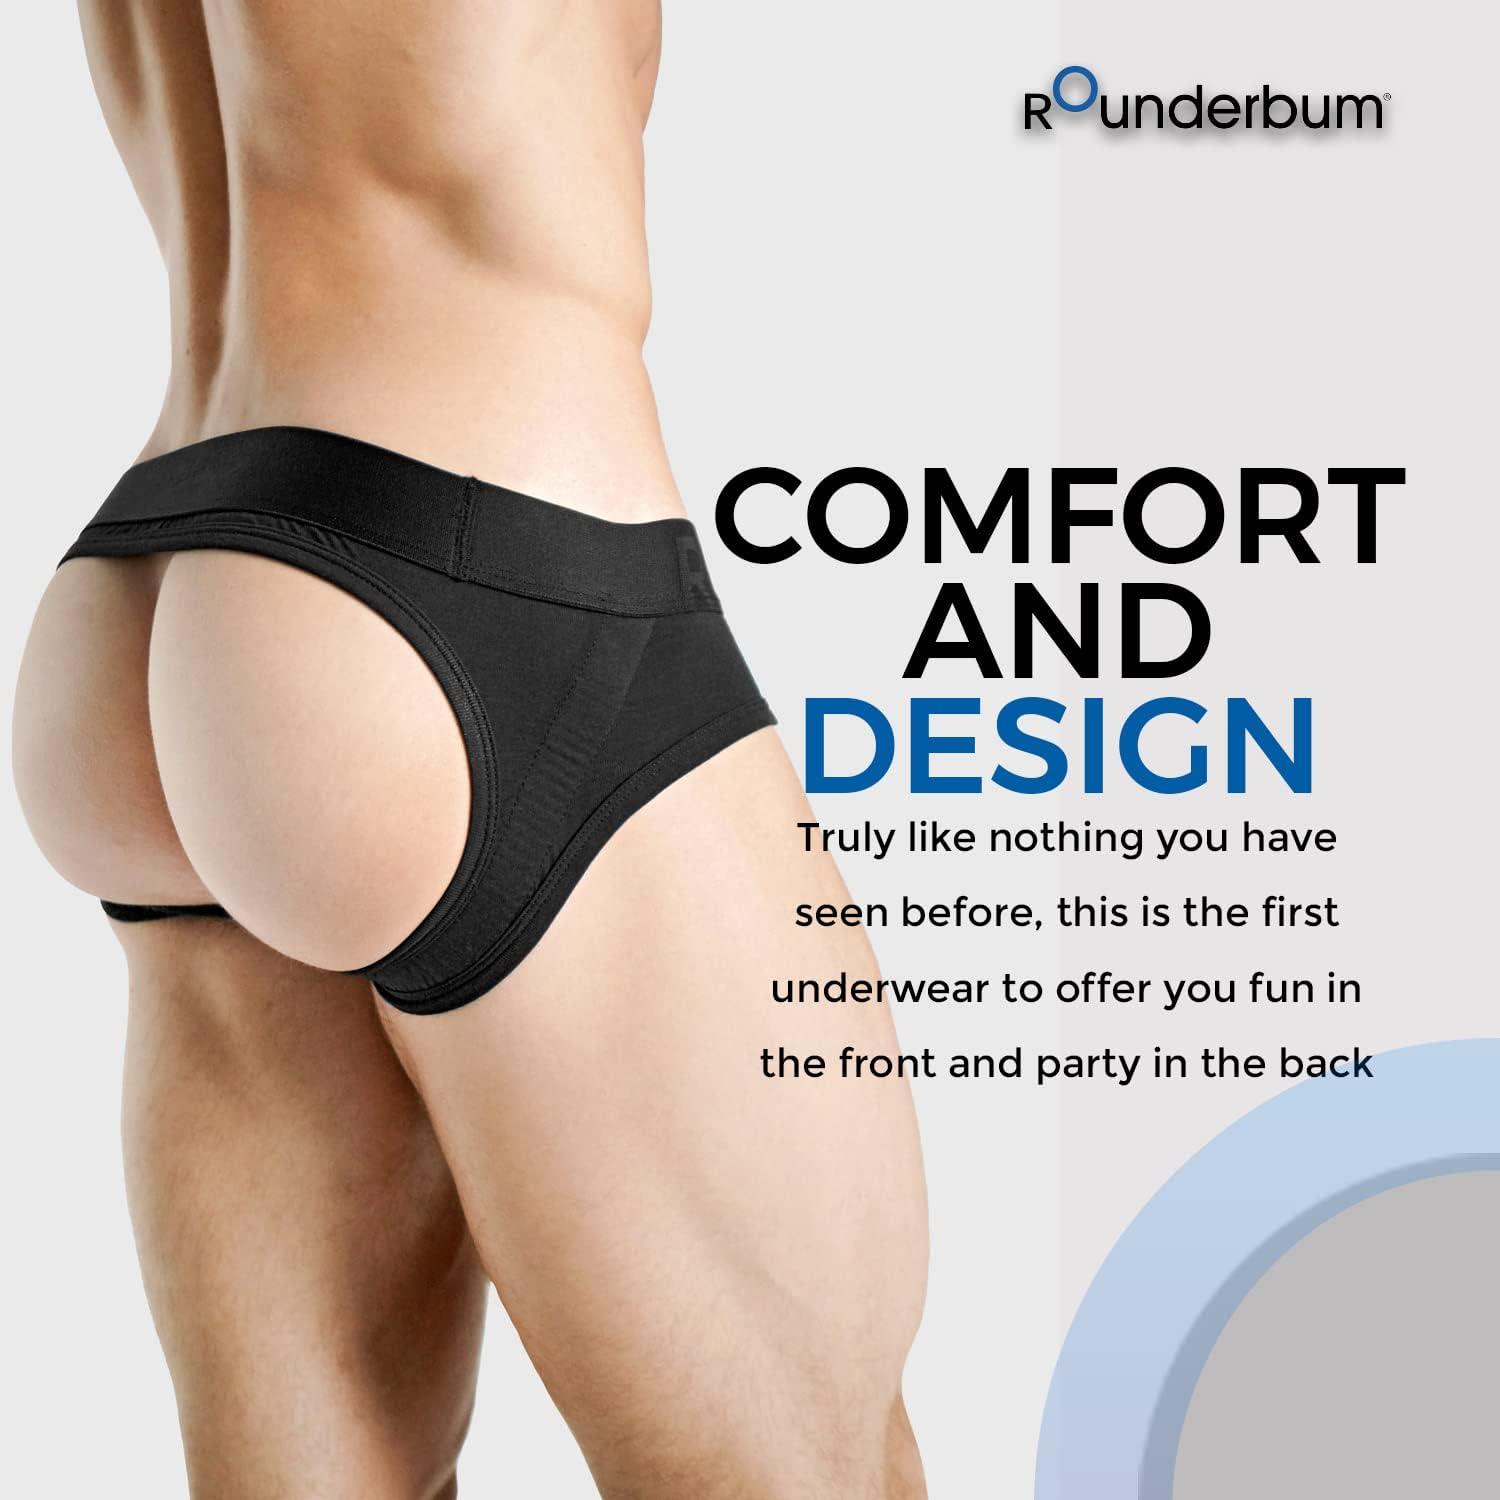 Men's Butt Lifting Underwear – Because Women Like Guys Butts - The